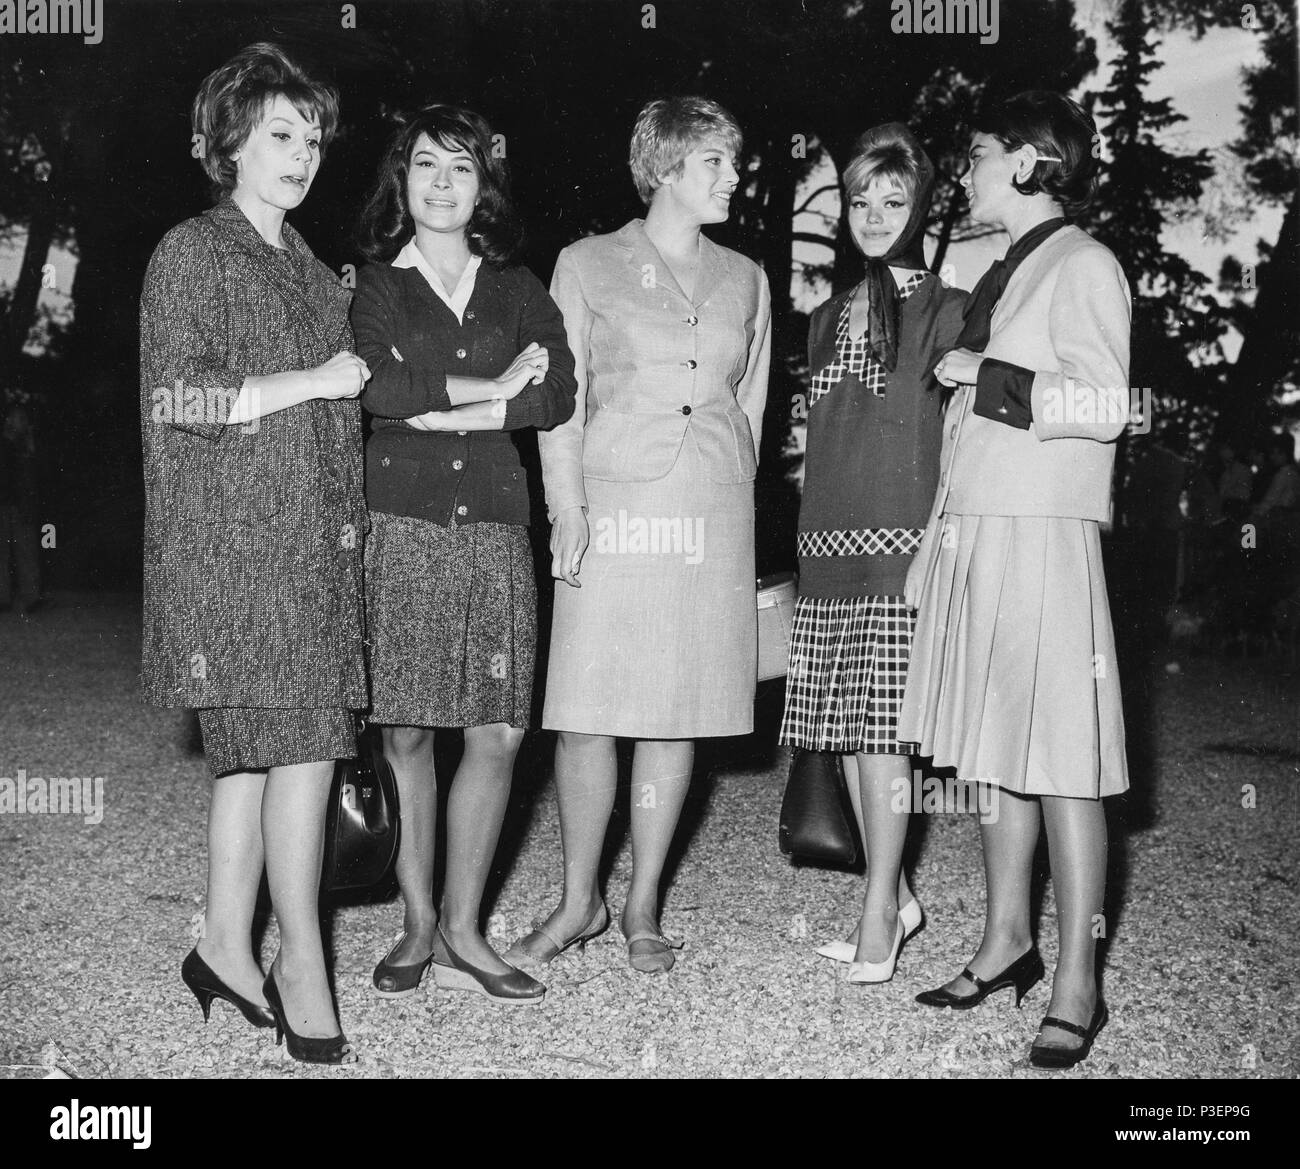 Tina gloriani, franca bettoja, didi perego, Cristina gaioni, Valeria Moriconi, Rome 1962 Banque D'Images